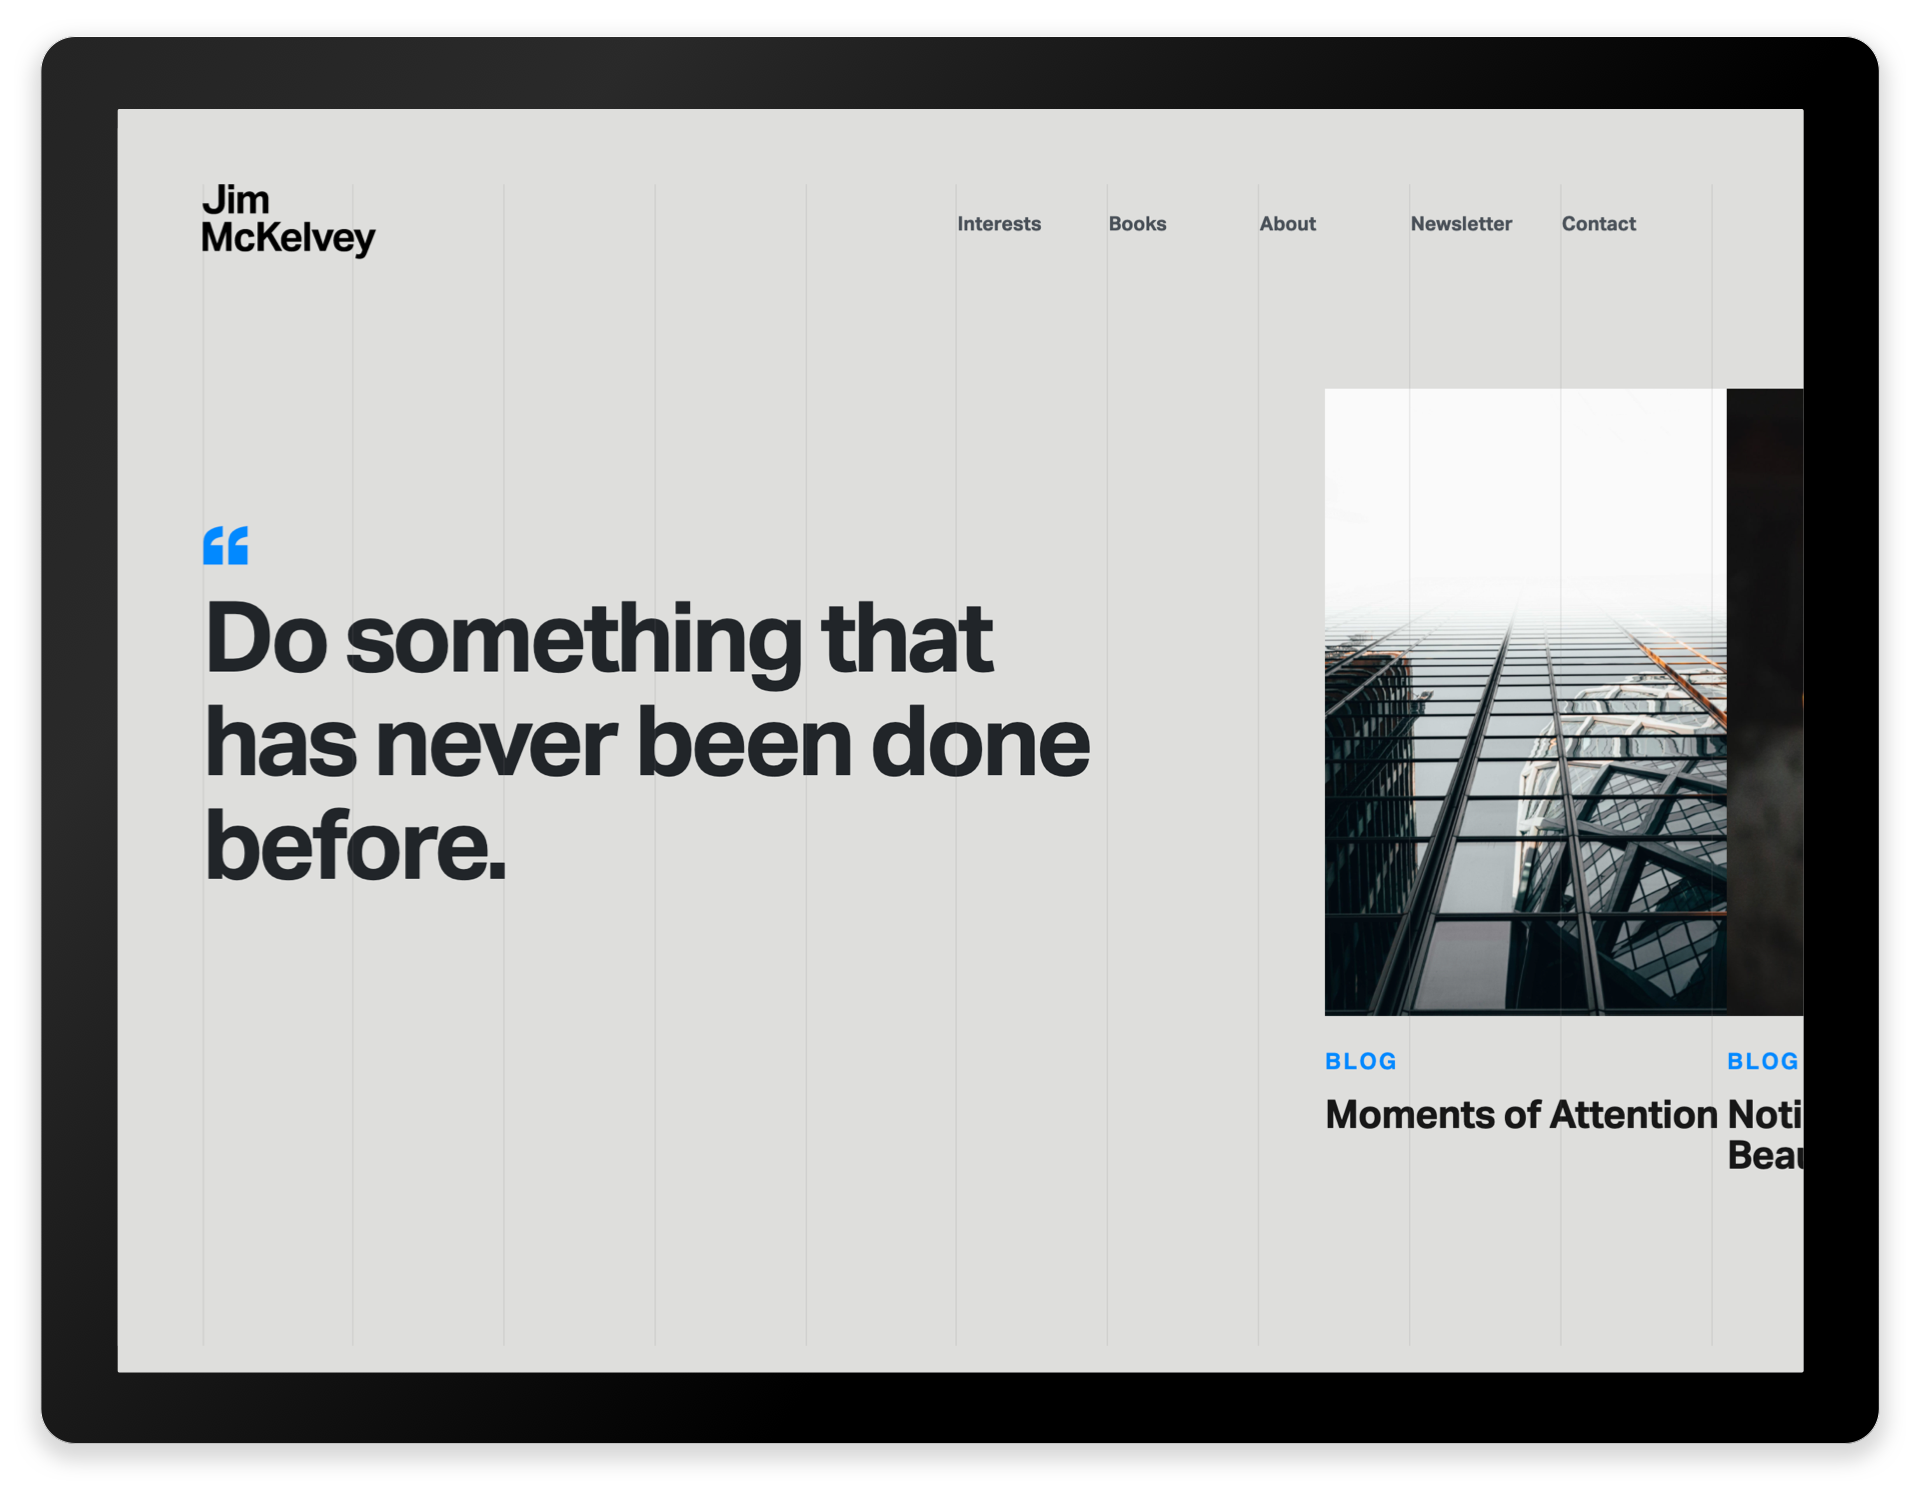 The homepage design for Jim McKelvey's new website